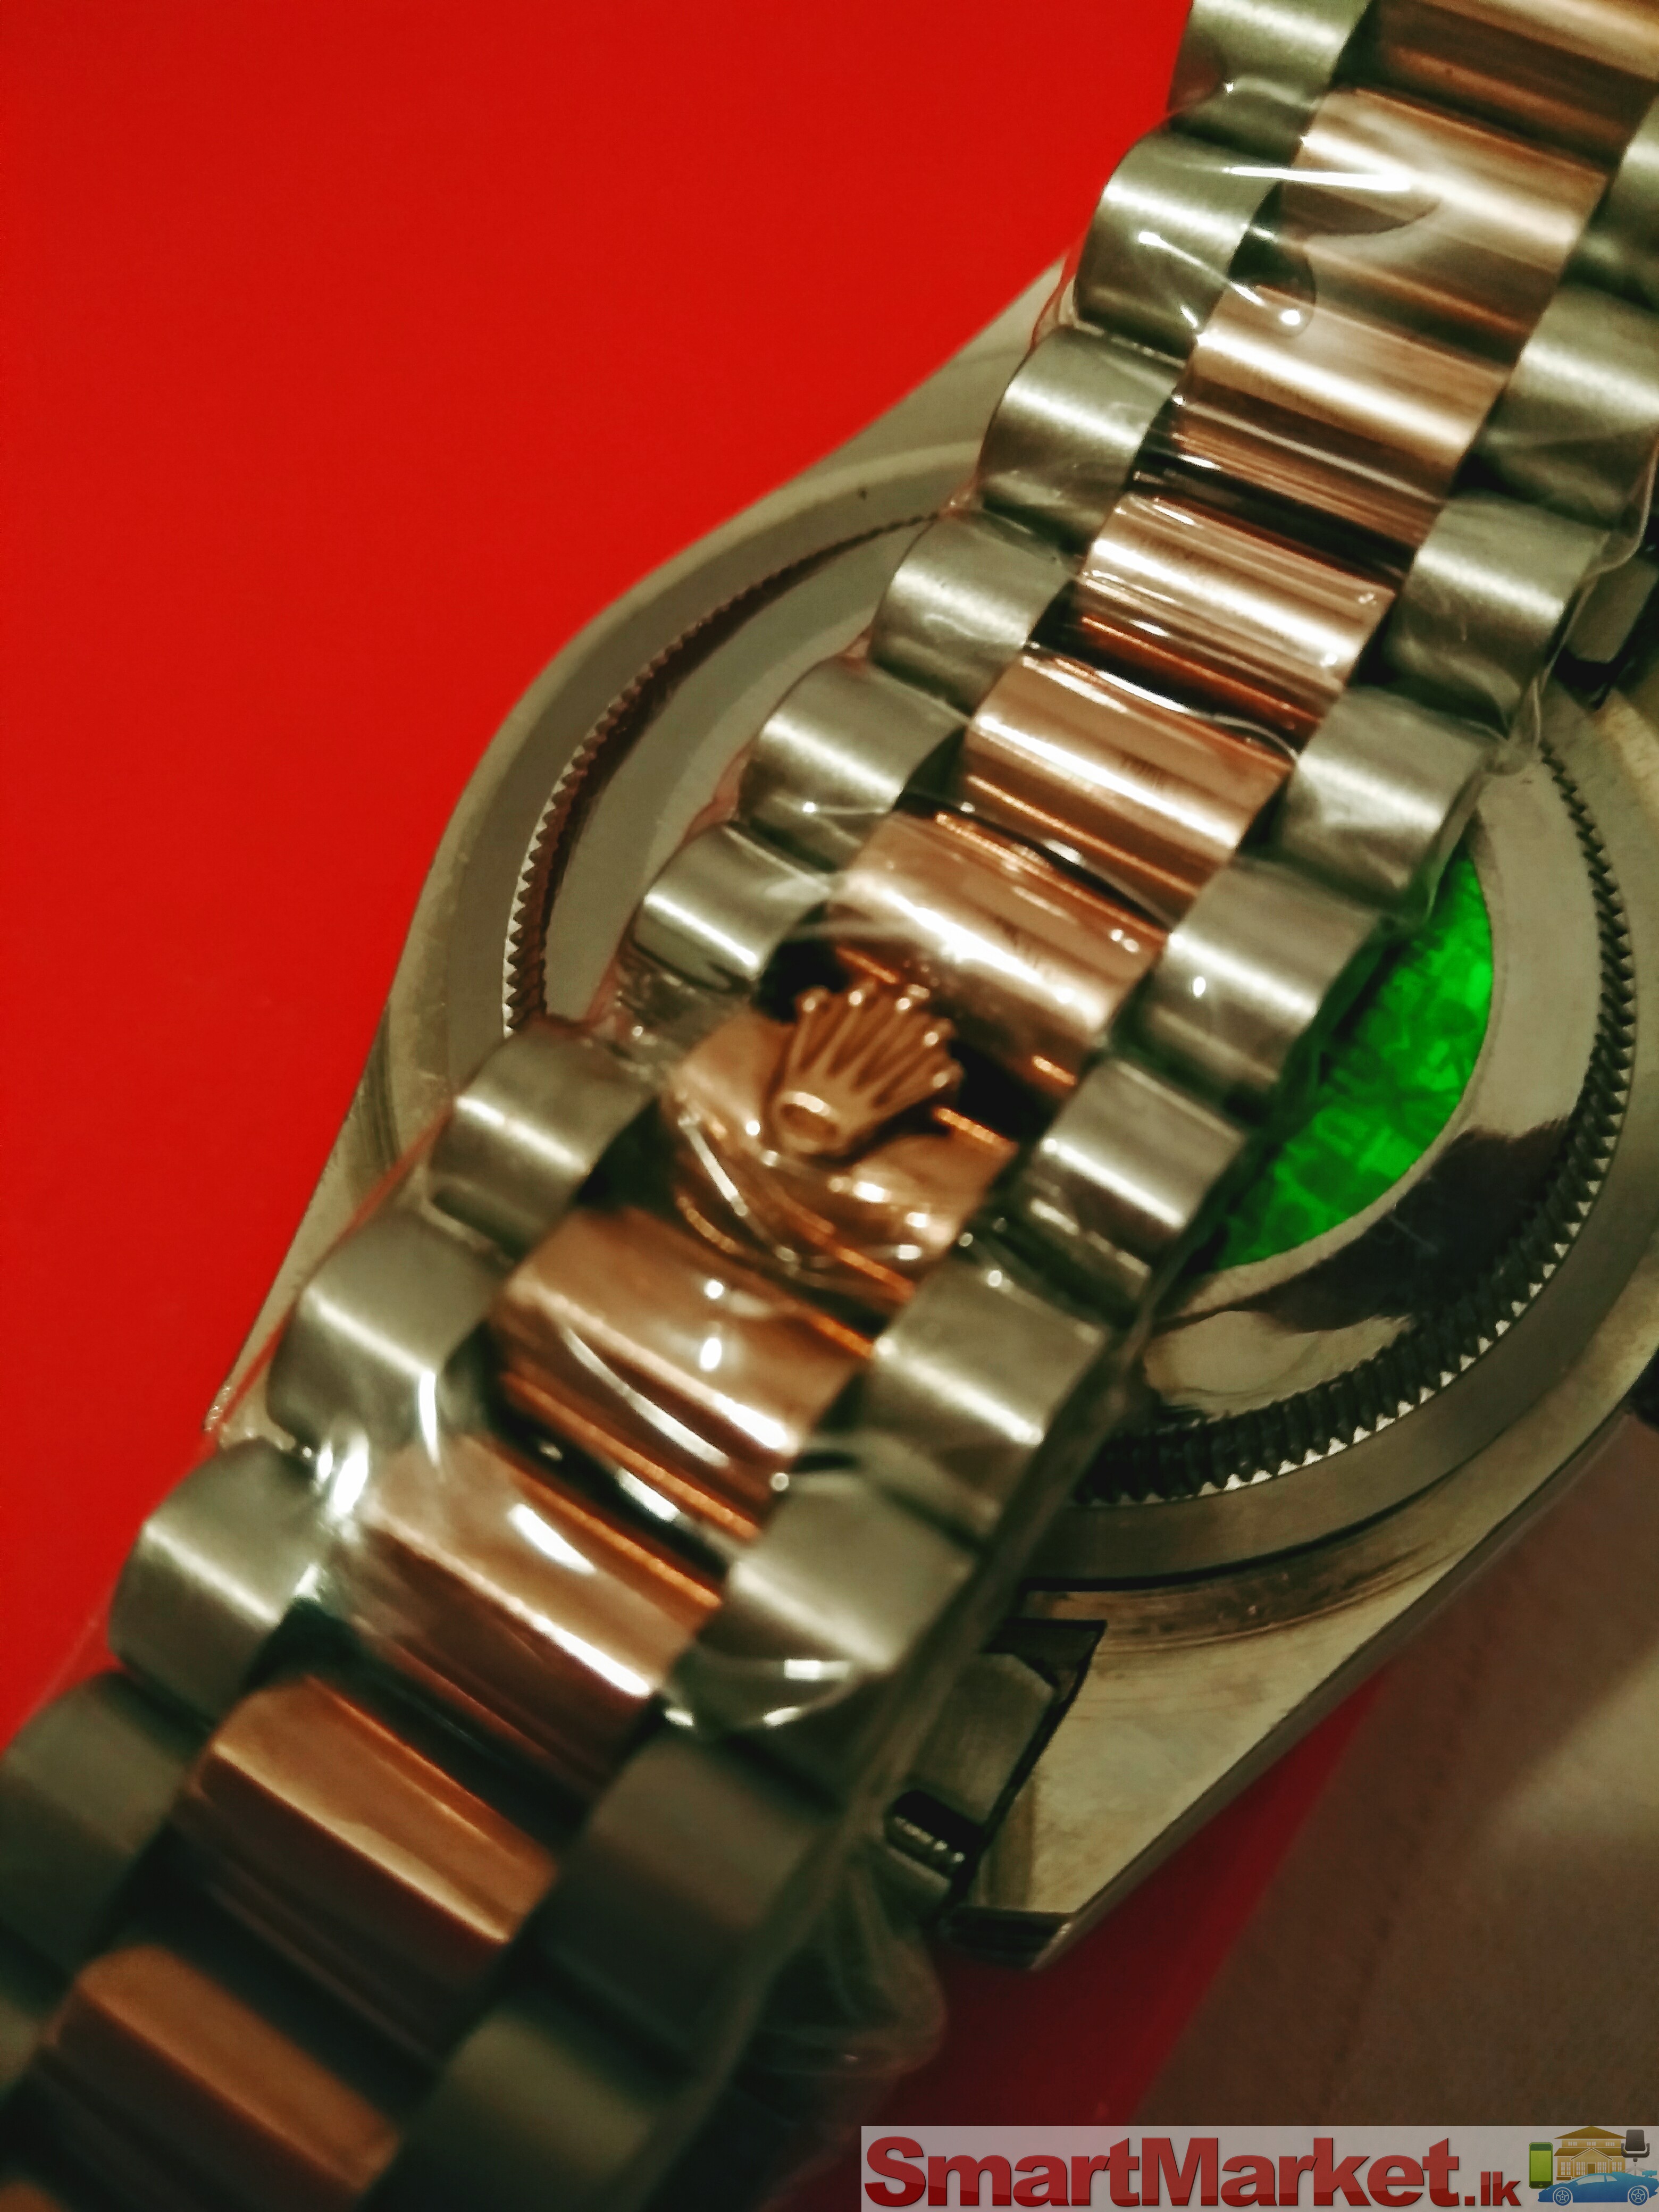 Rolex chronograph in metallic rose gold finish AAA